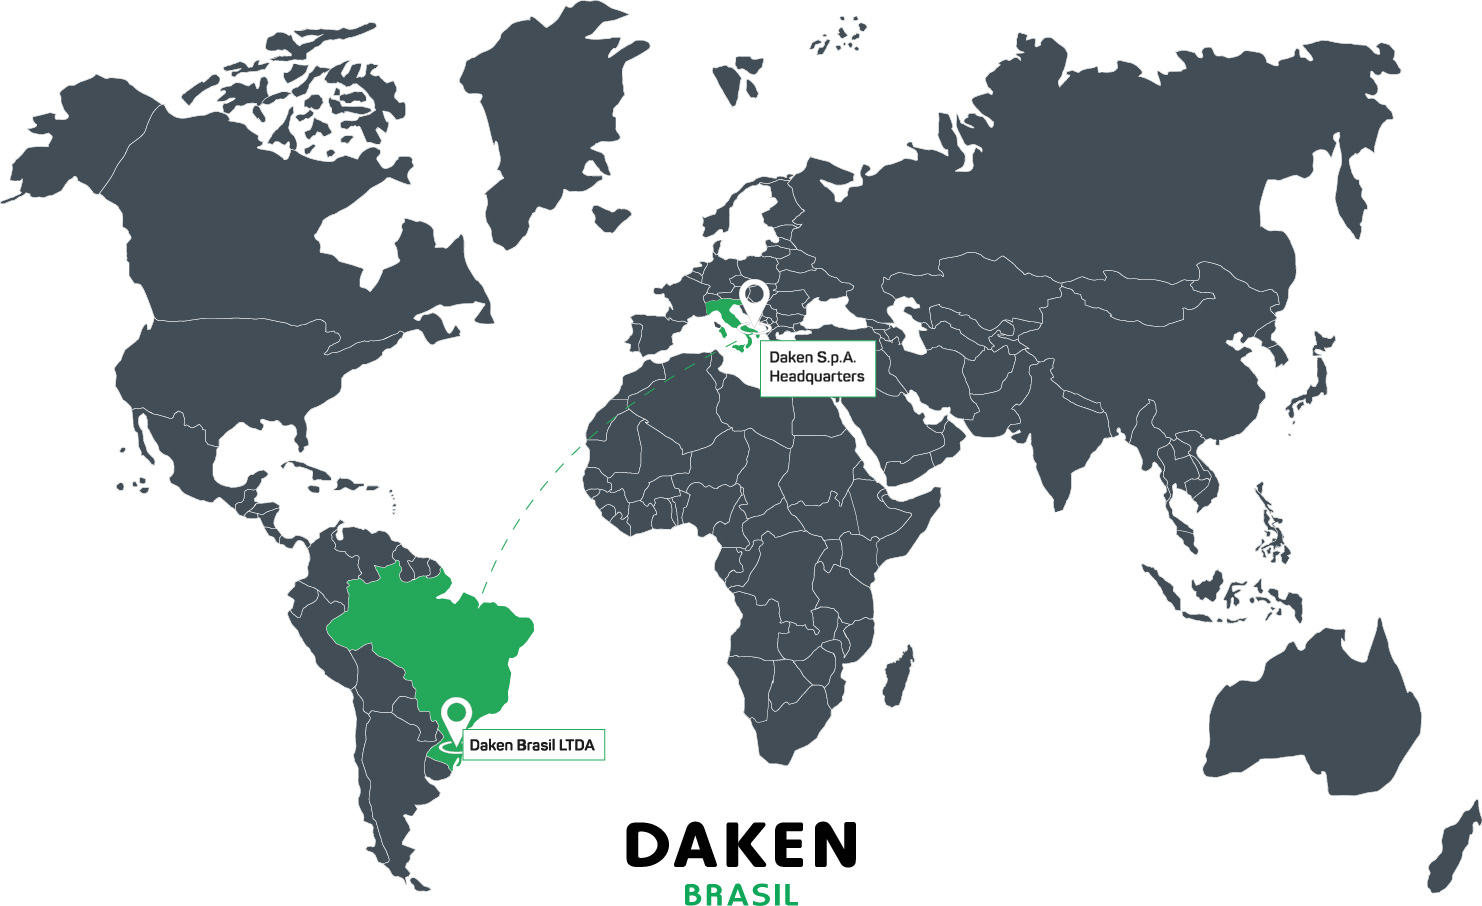 Daken Brasil, the first Daken branch, is born today